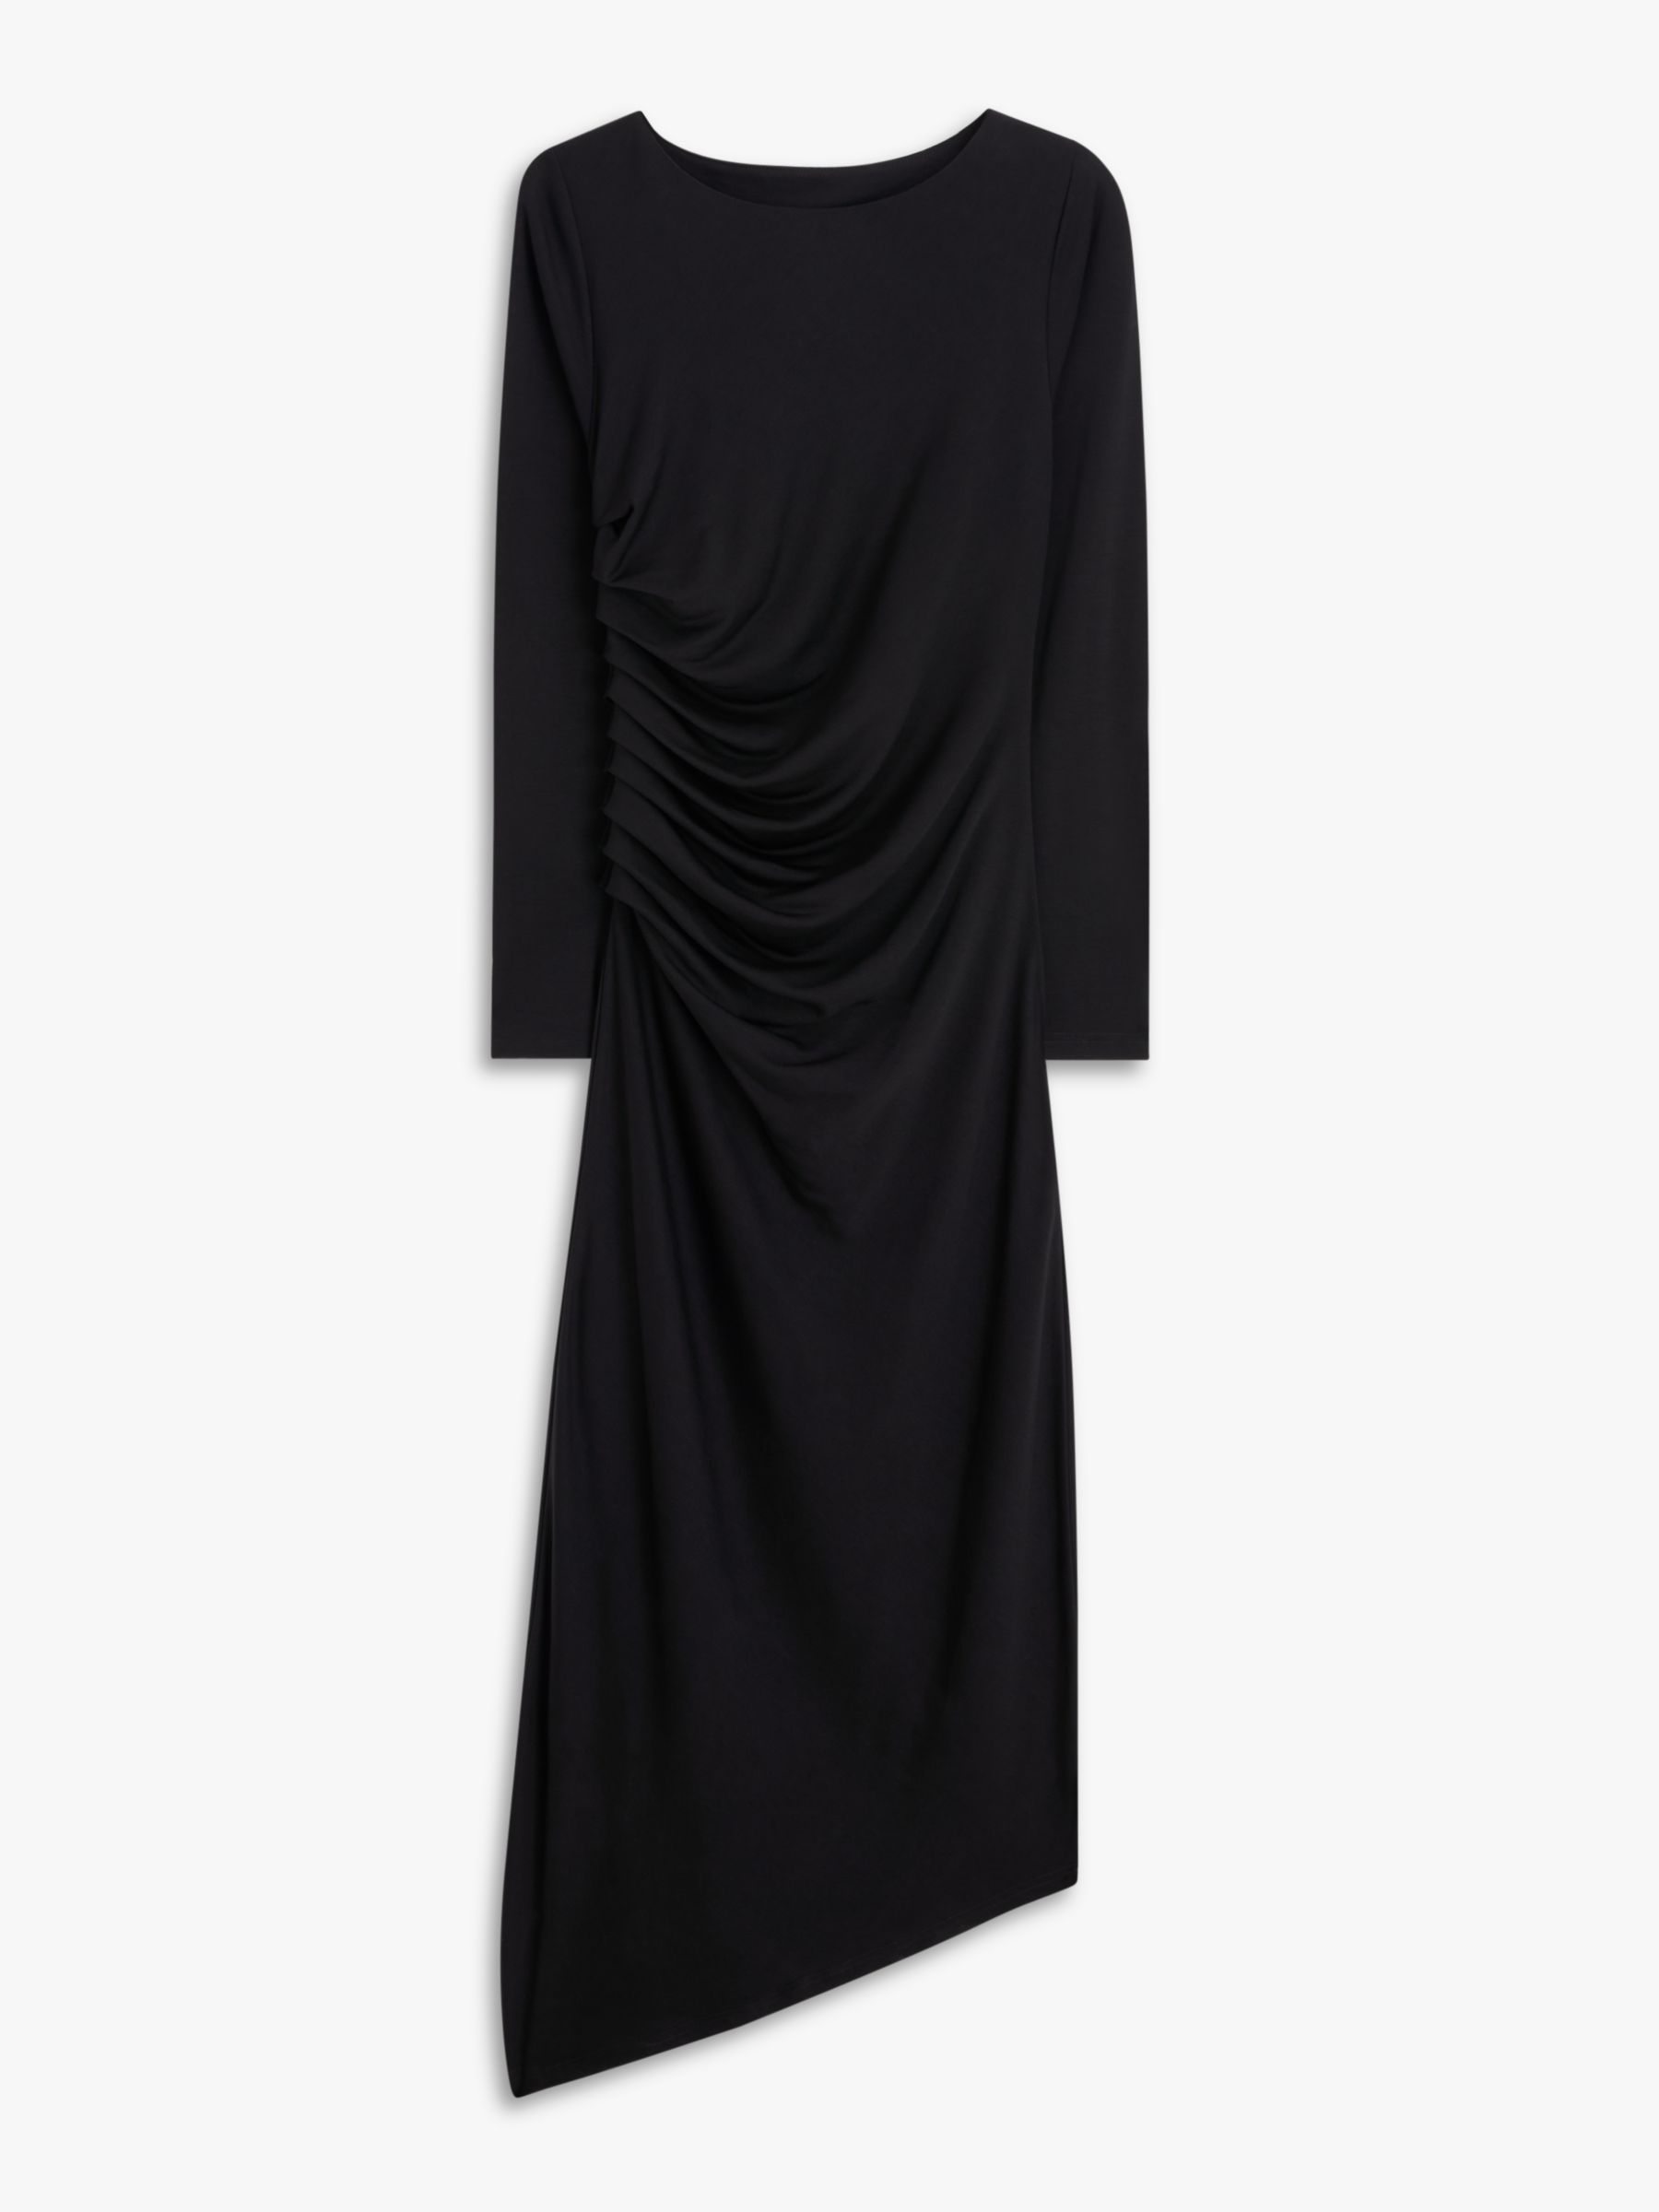 John Lewis Women's Ruched Asymmetric Dress, Black at John Lewis & Partners